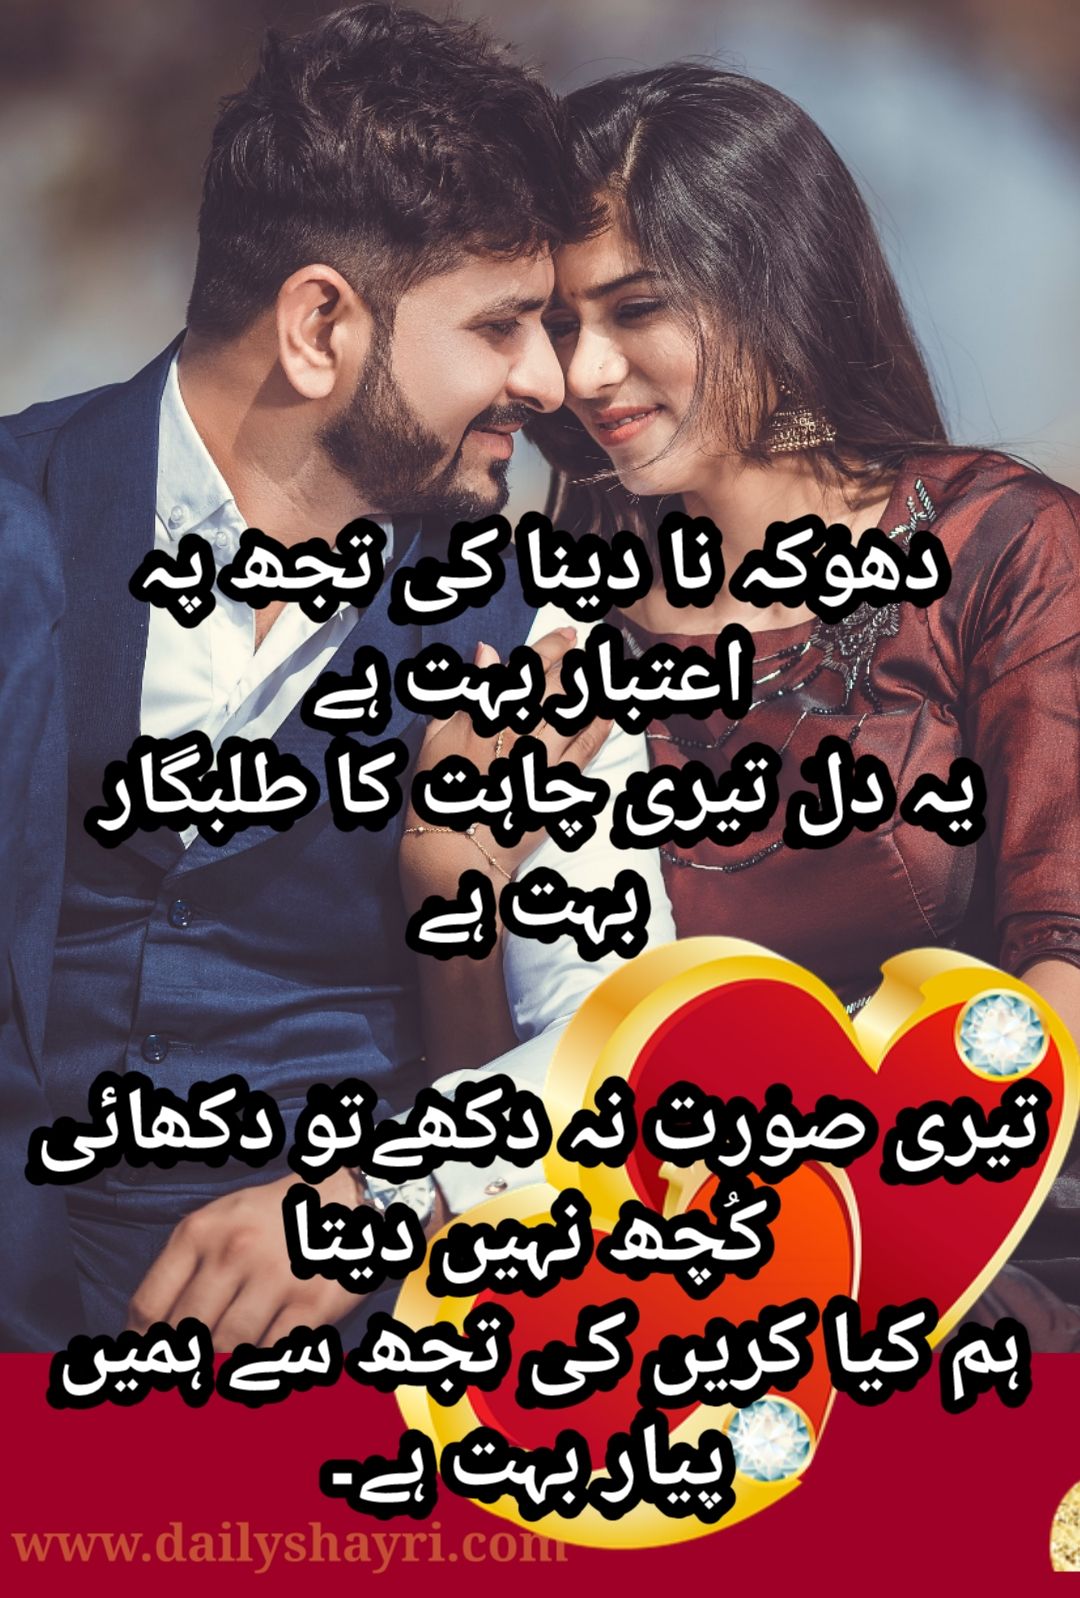 Urdu images shayari dating 2022 best love and in 